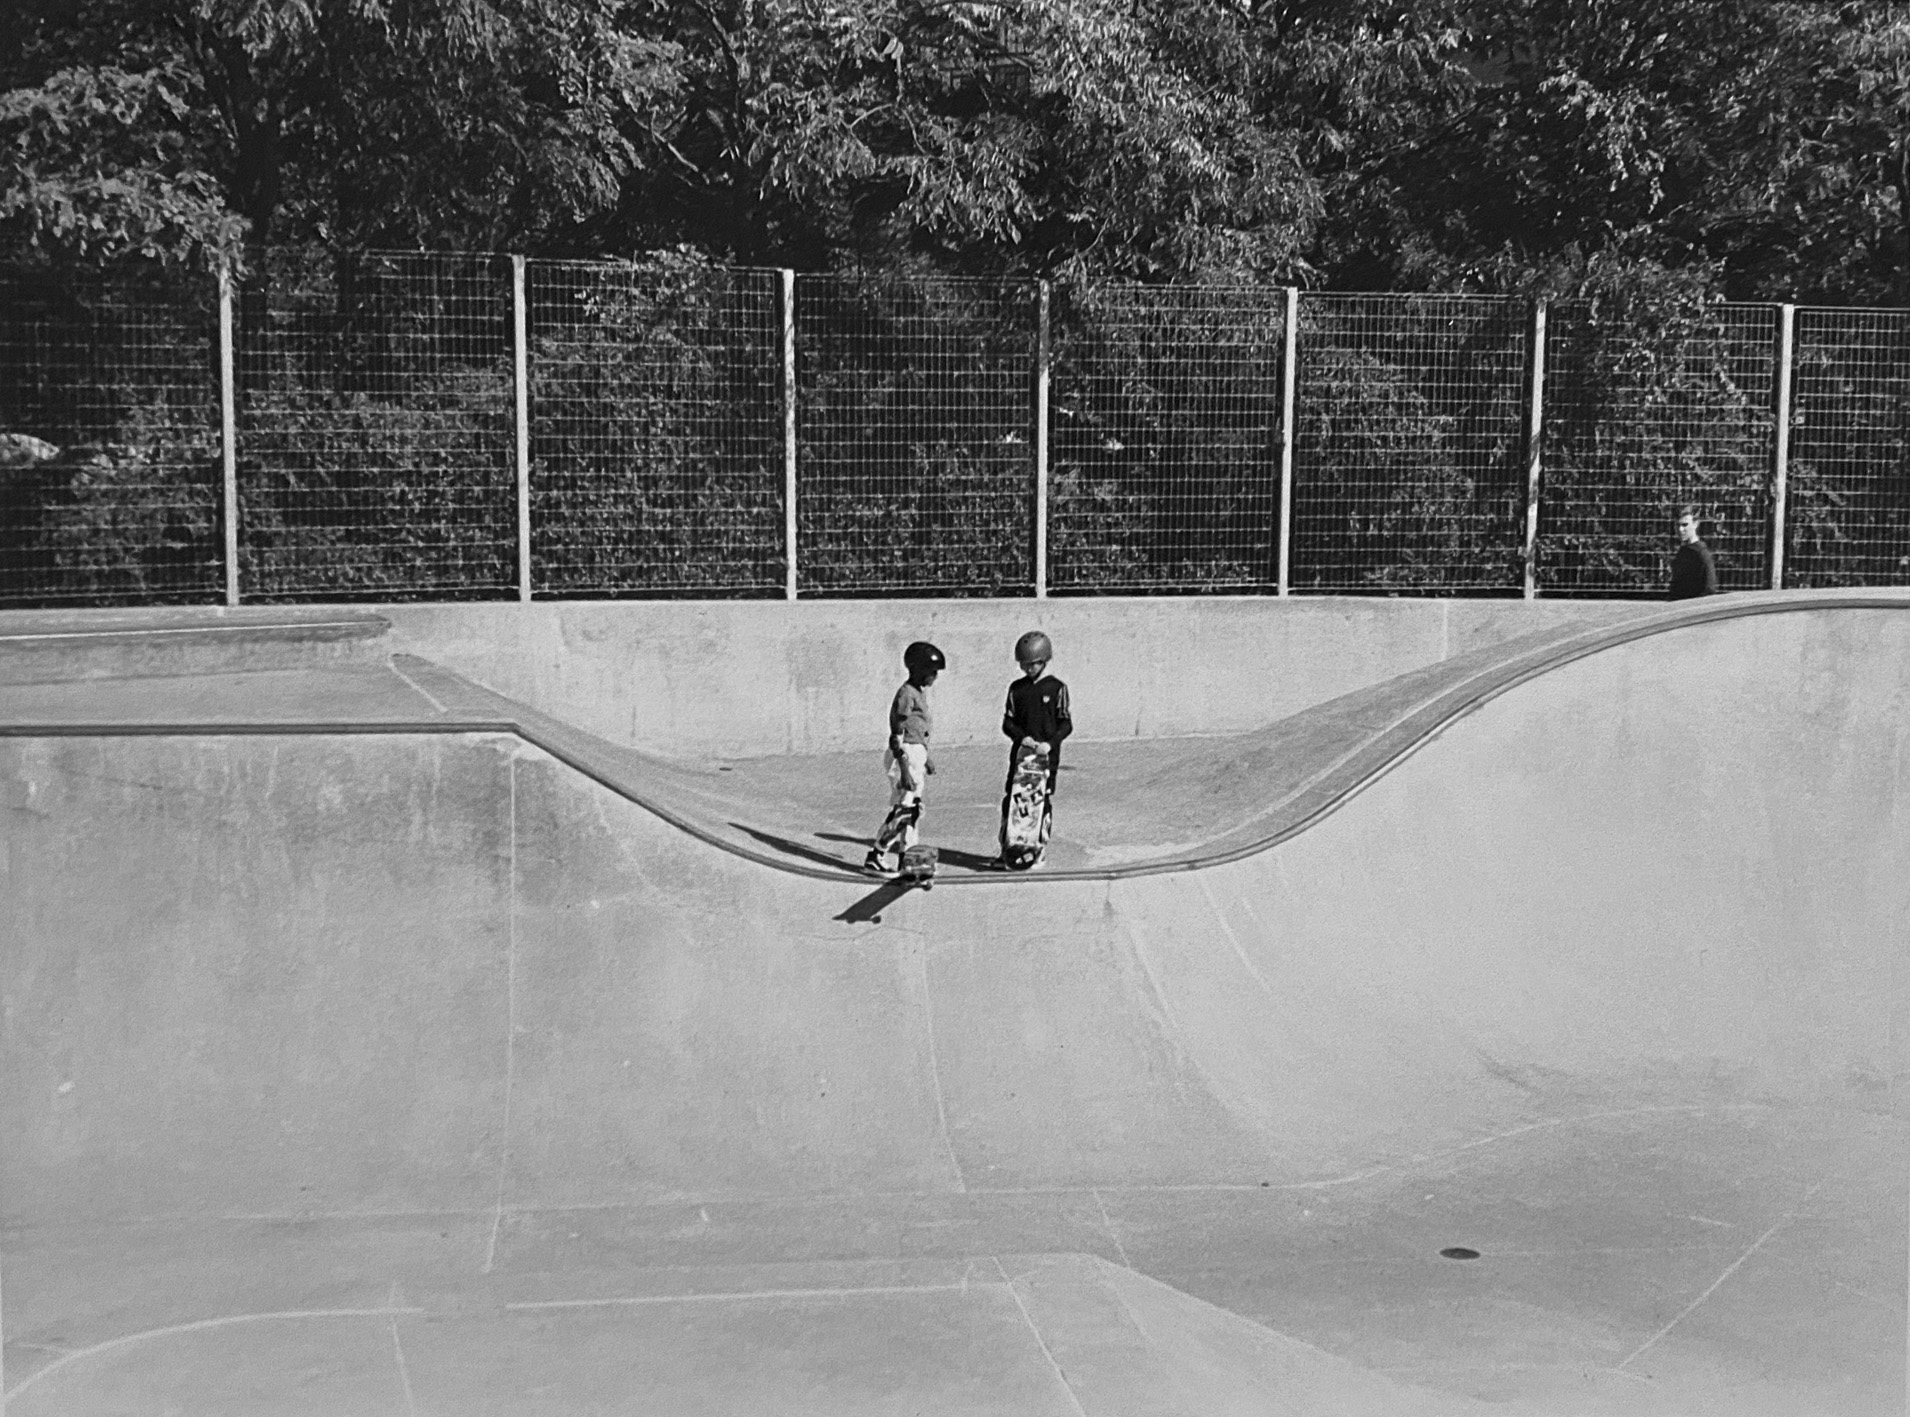 Children standing at a skate park